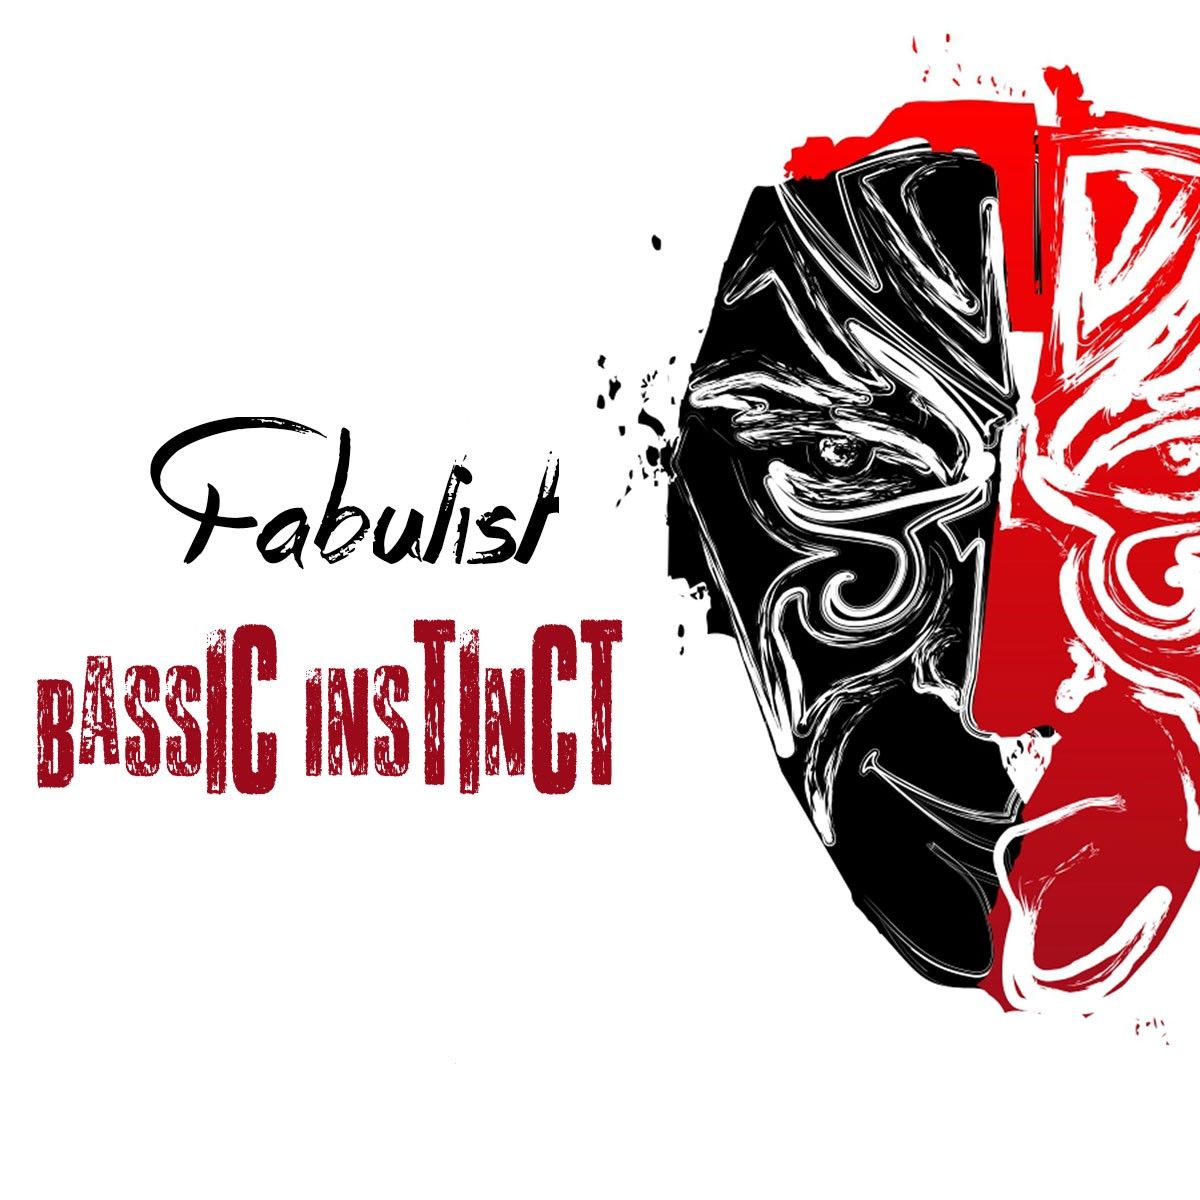 fabulist-bassic-instinct3.jpg